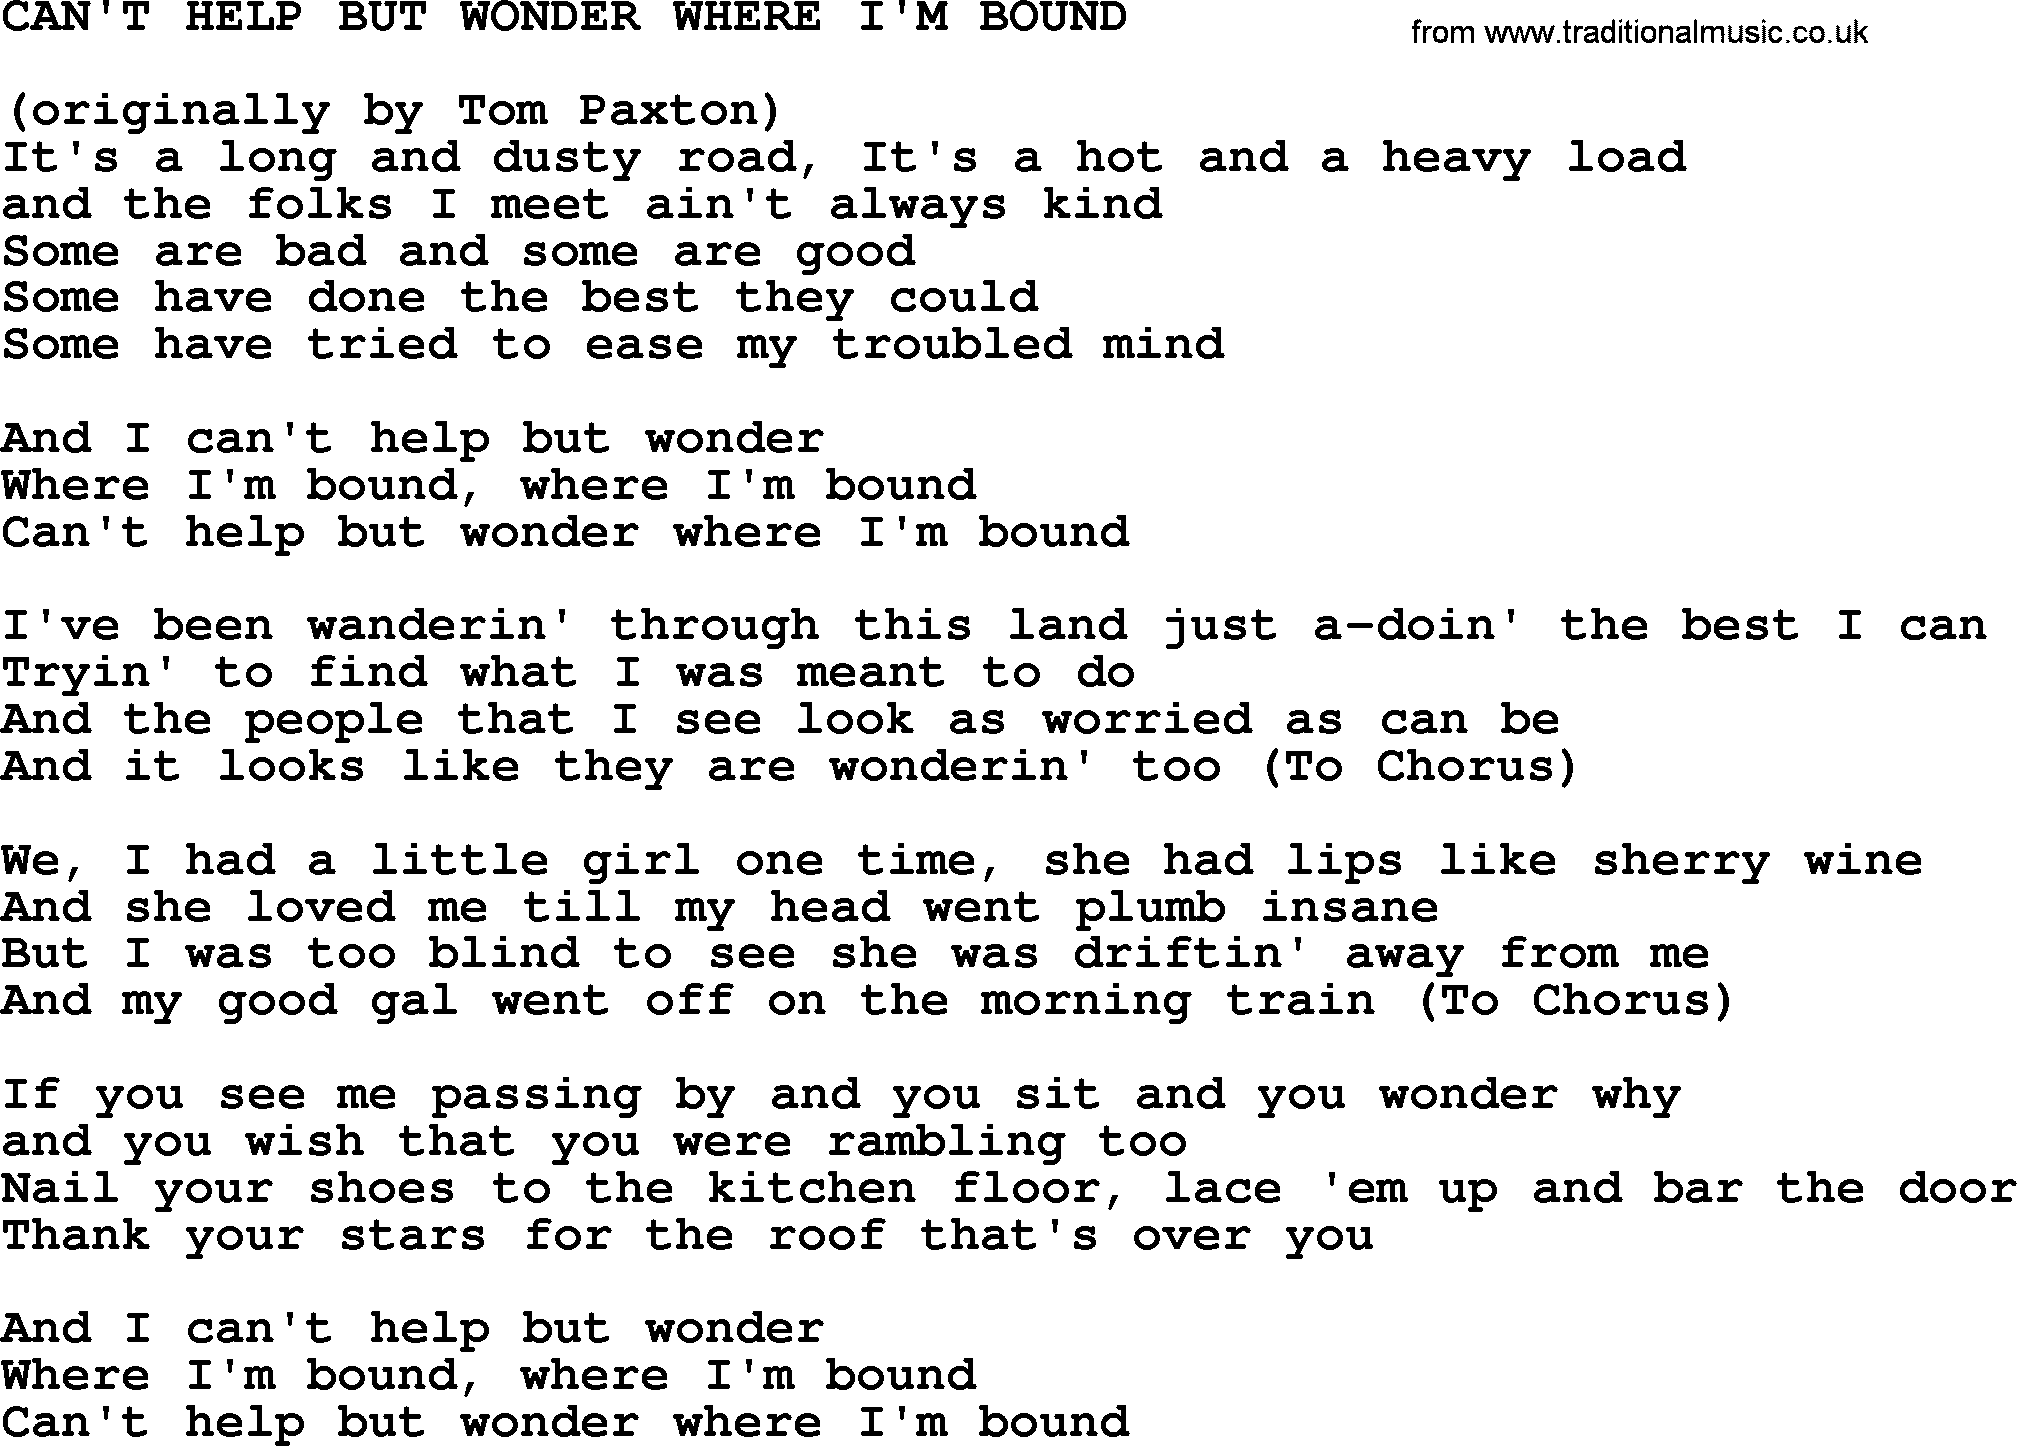 Johnny Cash song Can't Help But Wonder Where I'm Bound.txt lyrics